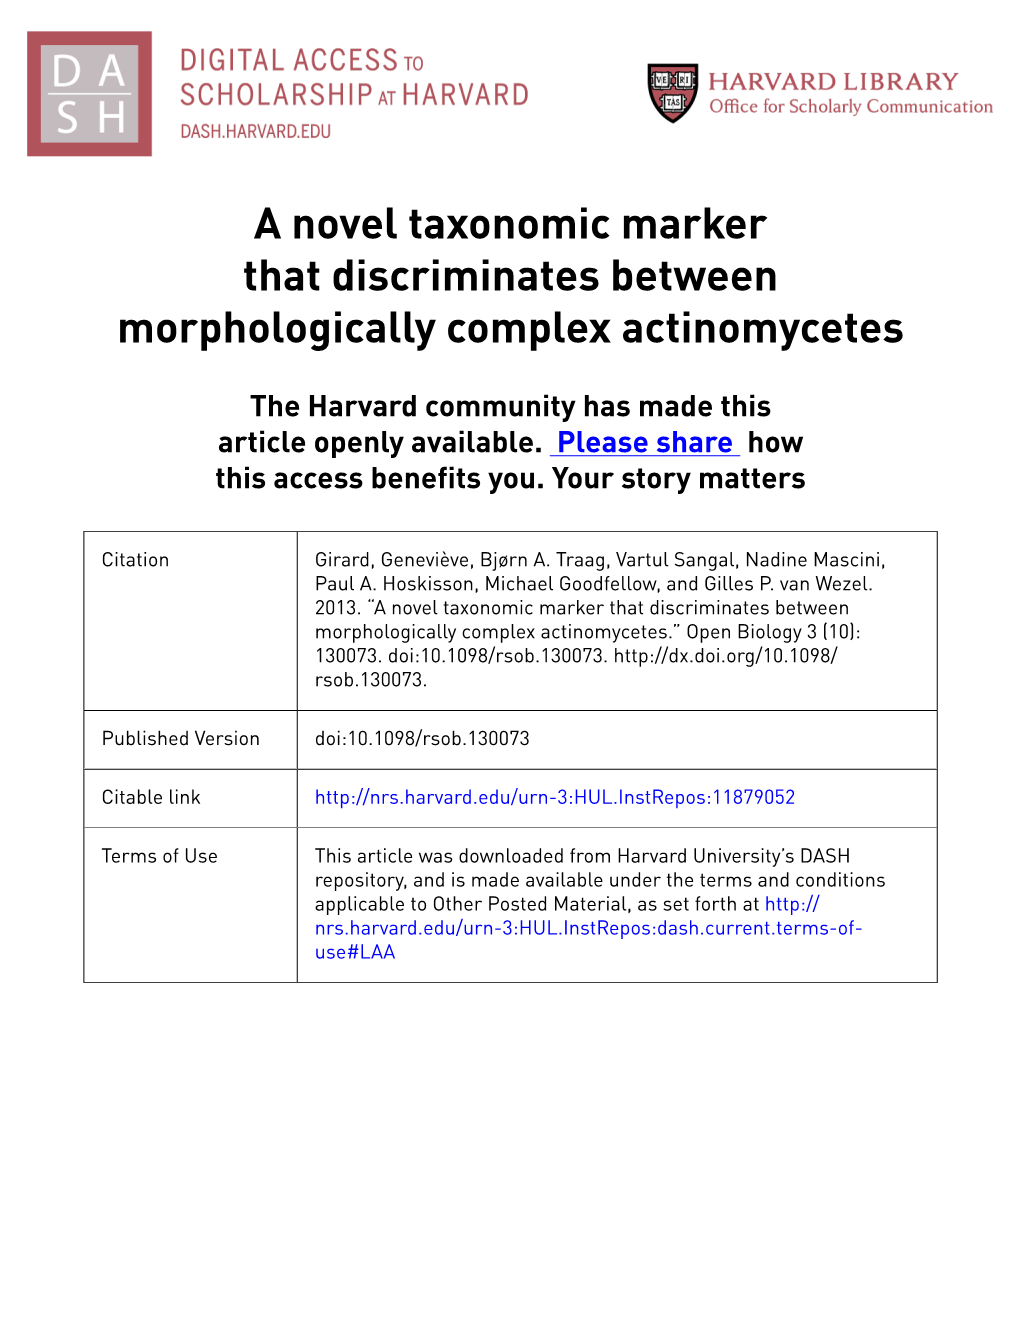 A Novel Taxonomic Marker That Discriminates Between Morphologically Complex Actinomycetes